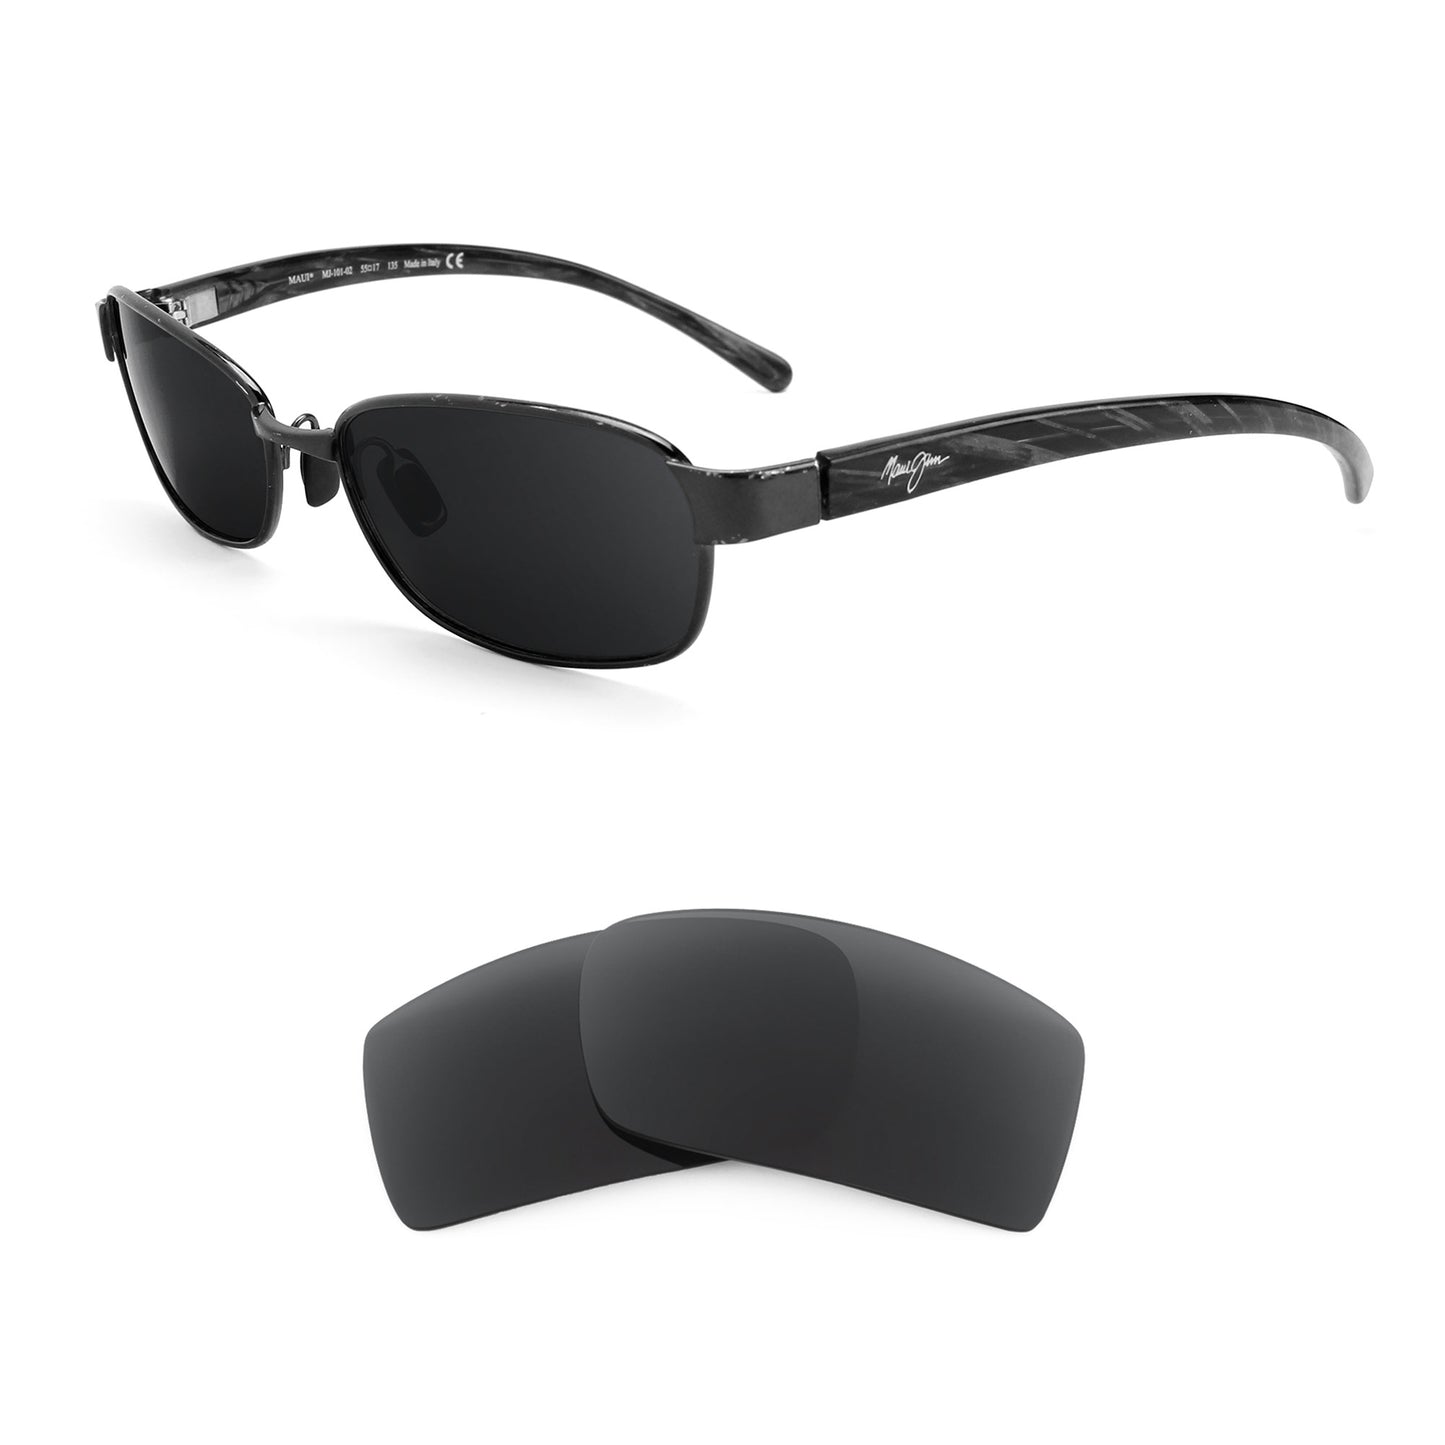 Maui Jim Kala MJ101 sunglasses with replacement lenses